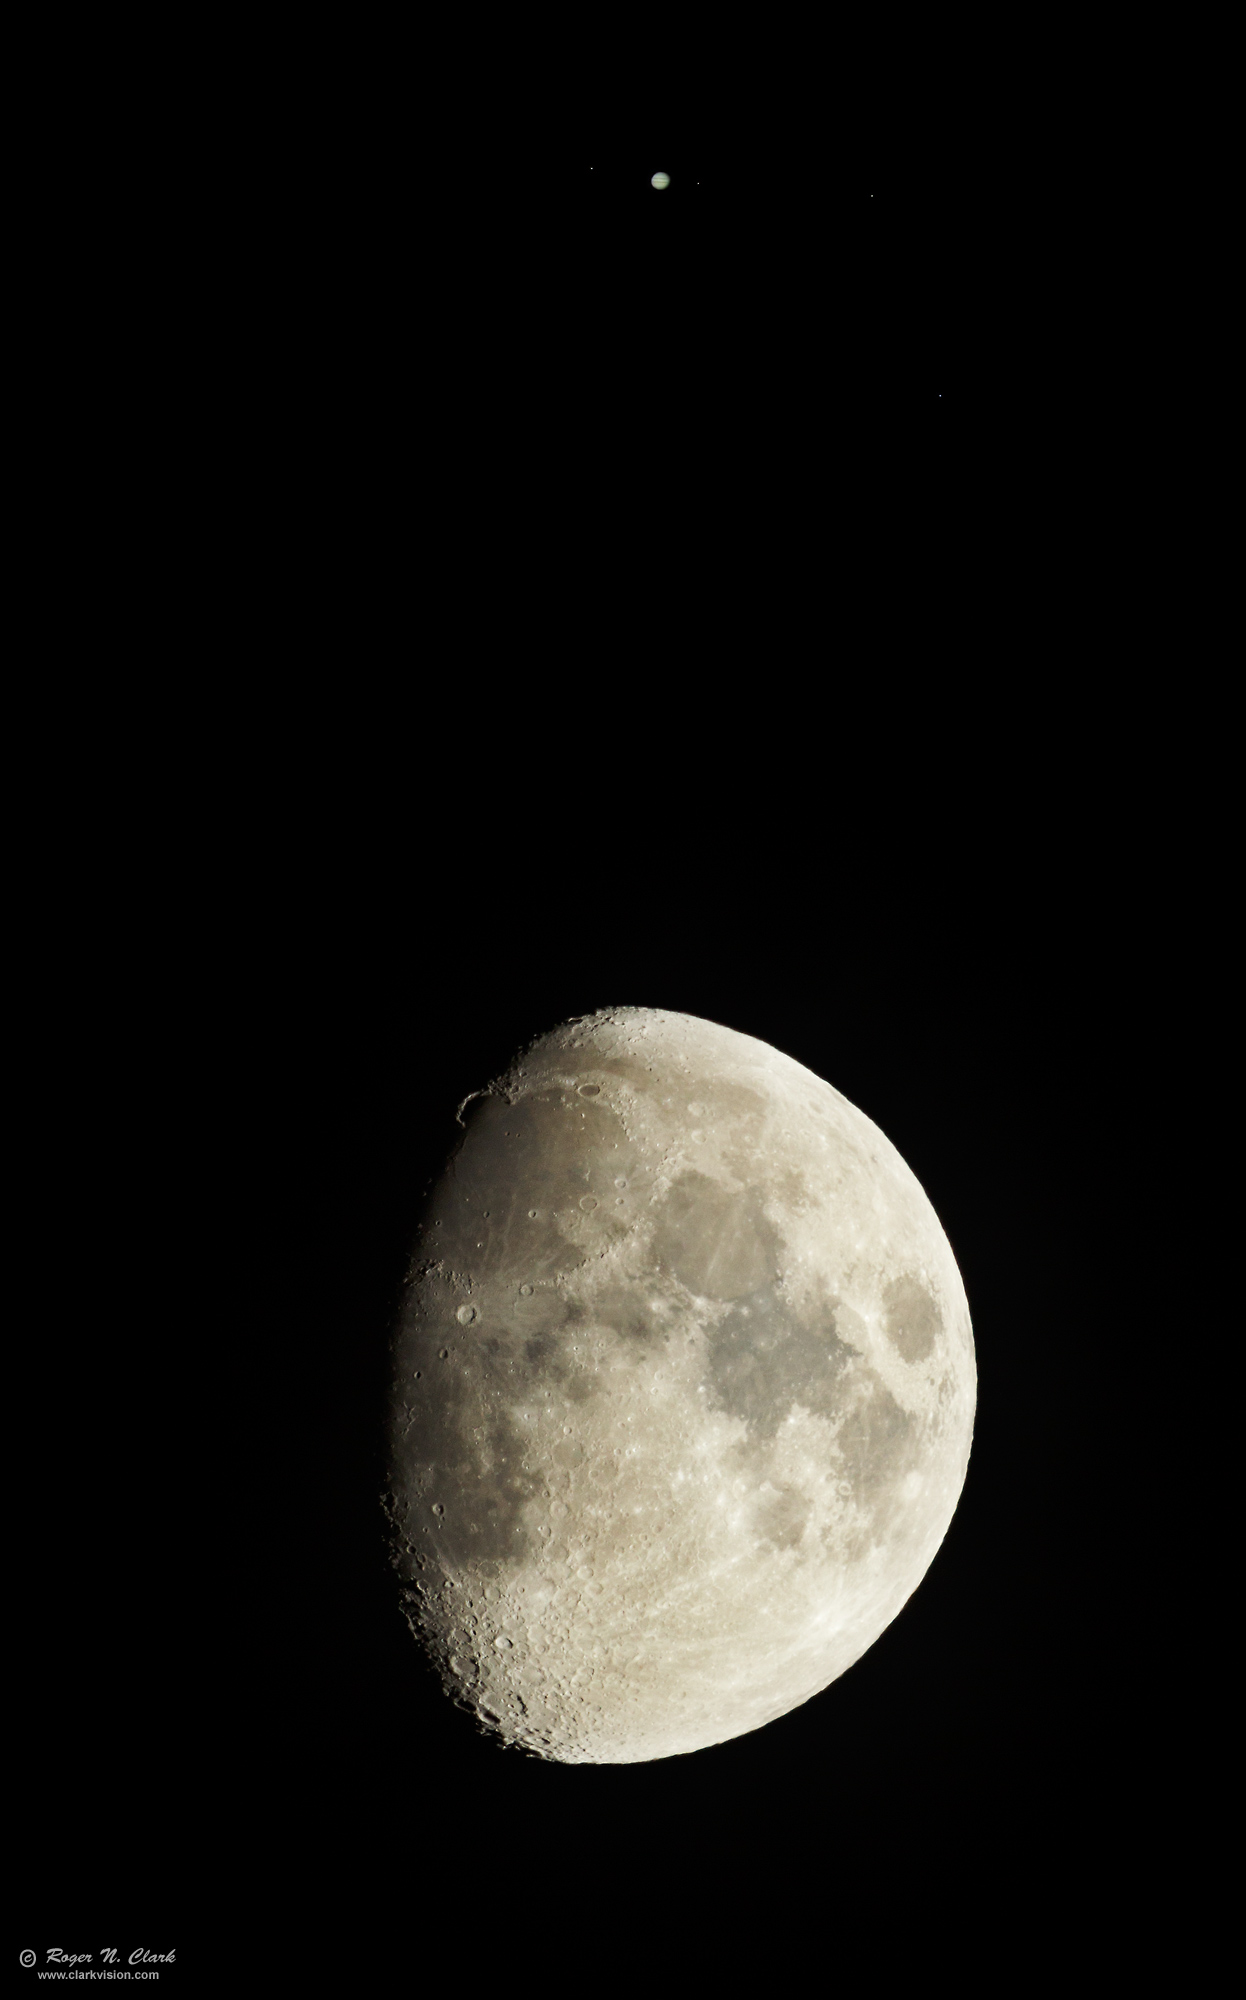 image moon+jupiter.c01.21.2013.C45I9438.g-2000v.jpg is Copyrighted by Roger N. Clark, www.clarkvision.com